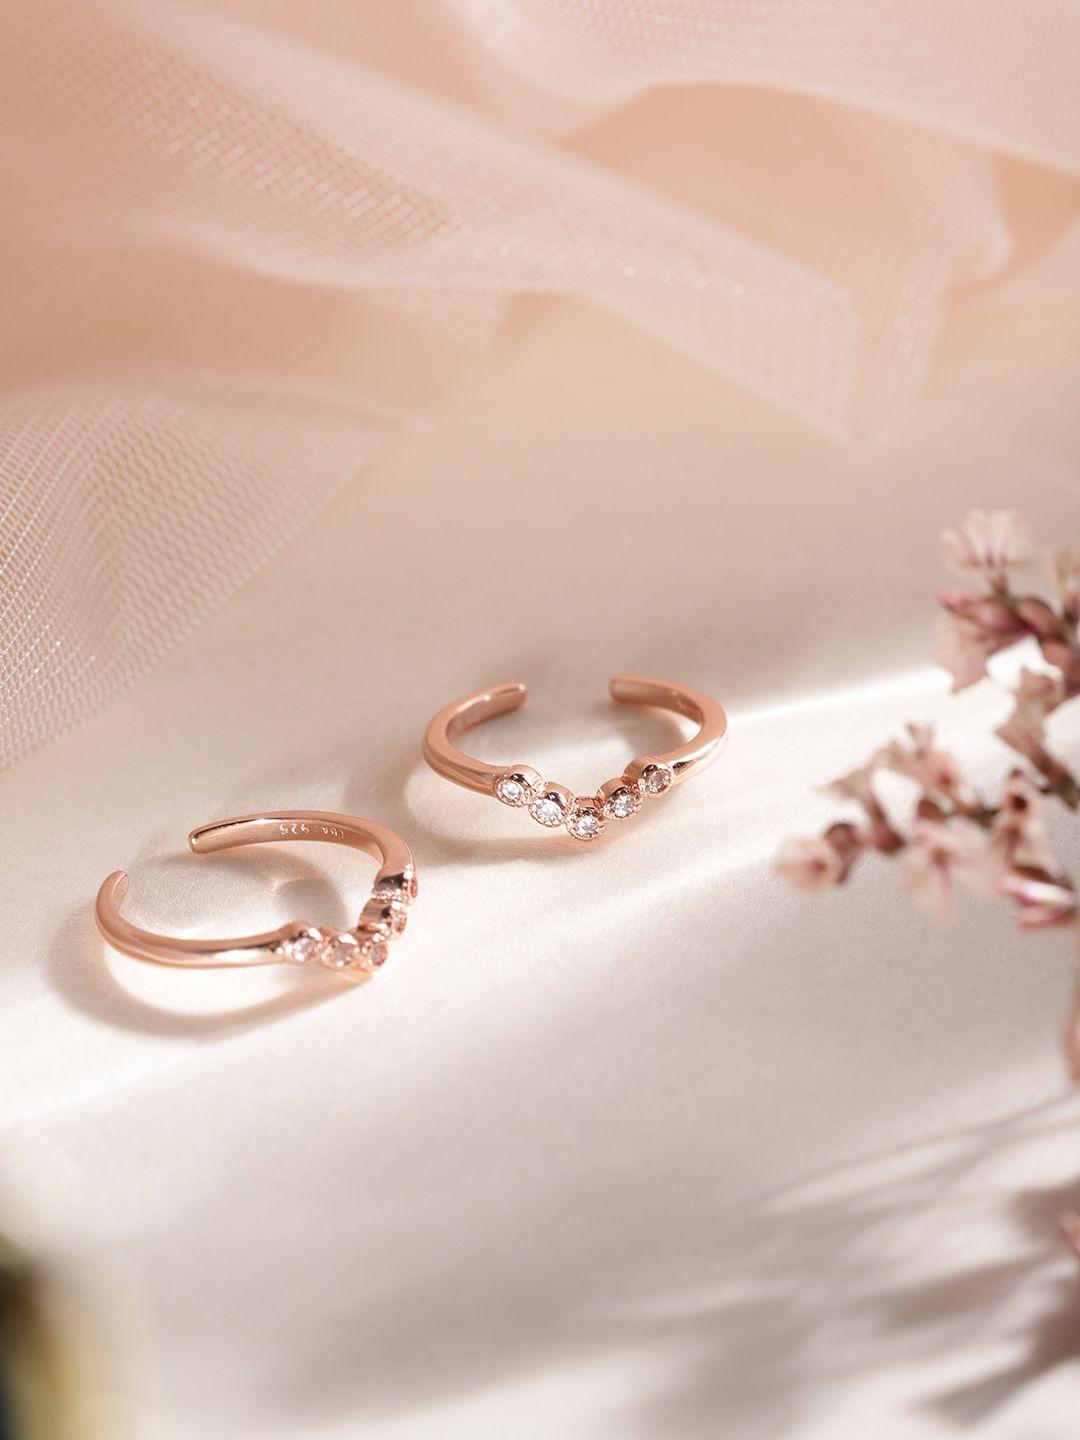 zavya-set-of-2-rose-gold-plated-925-sterling-silver-cz-studded-adjustable-toe-rings